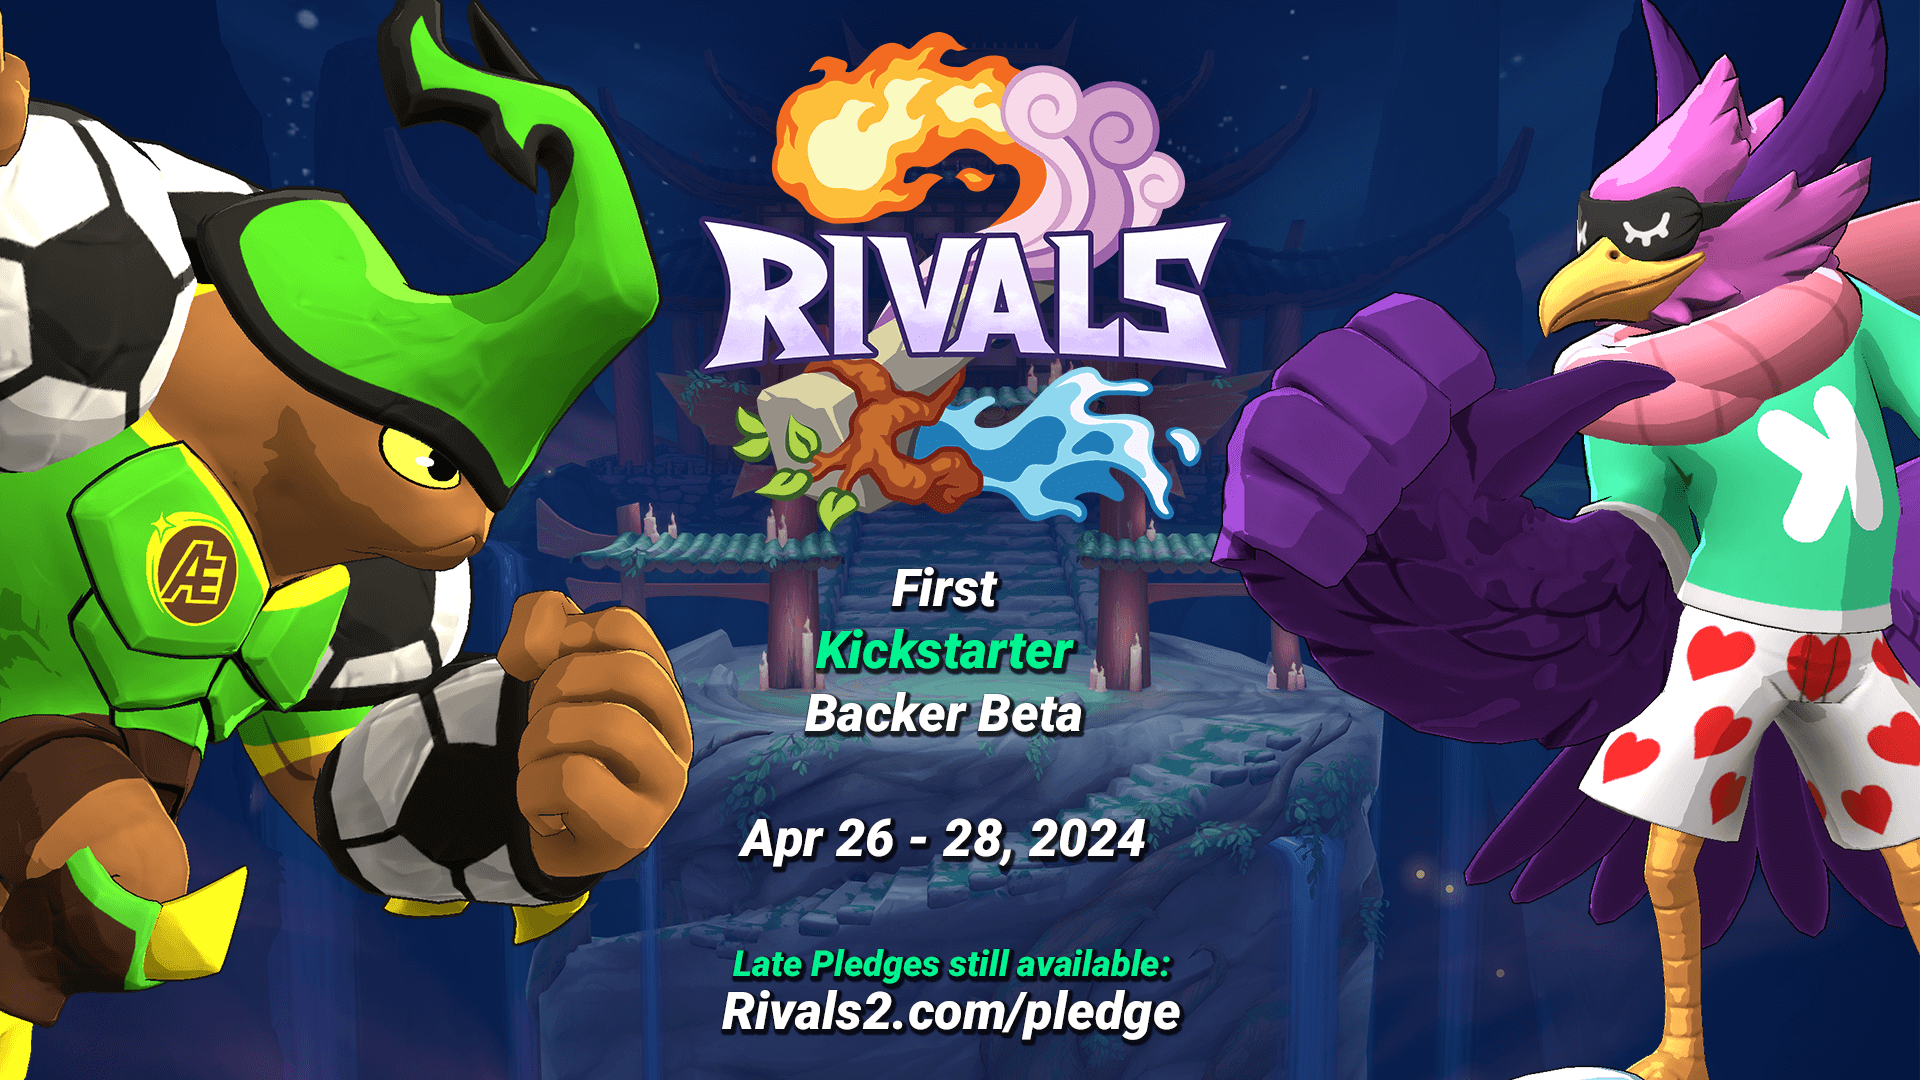 Rivals Kickstarter beta April 26-28th